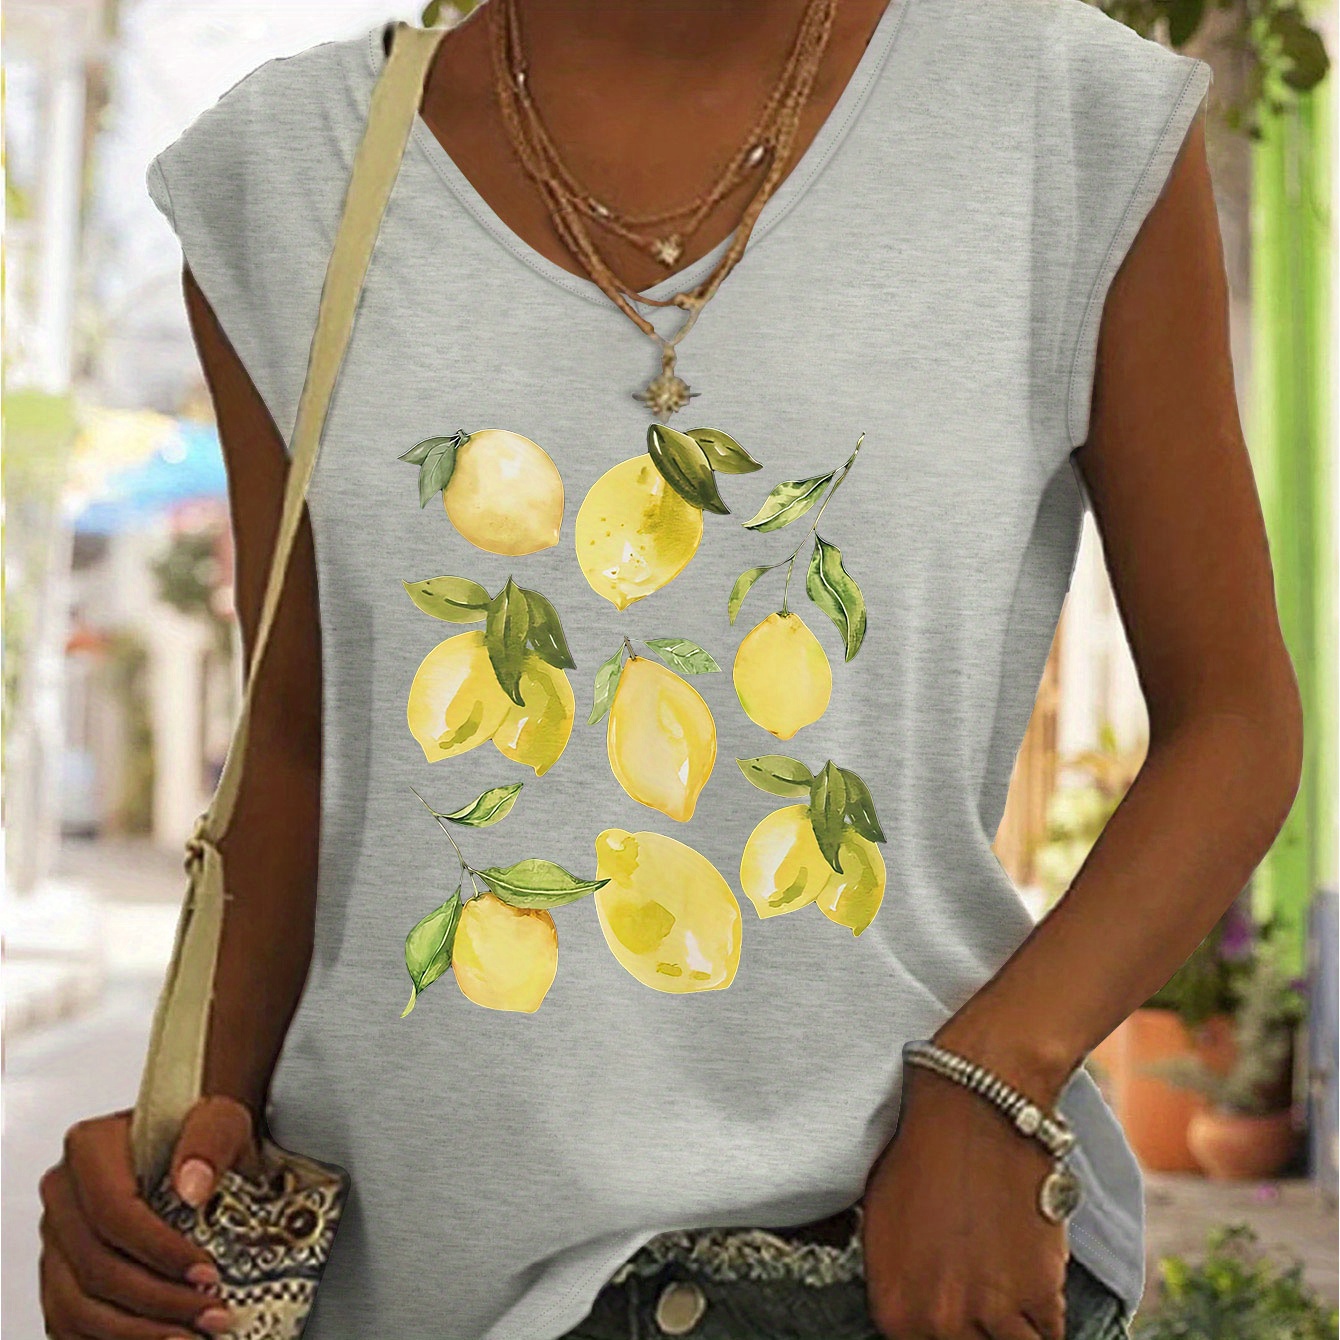 

Lemon Print V Neck Top, Casual Cap Sleeve Top For Summer, Women's Clothing